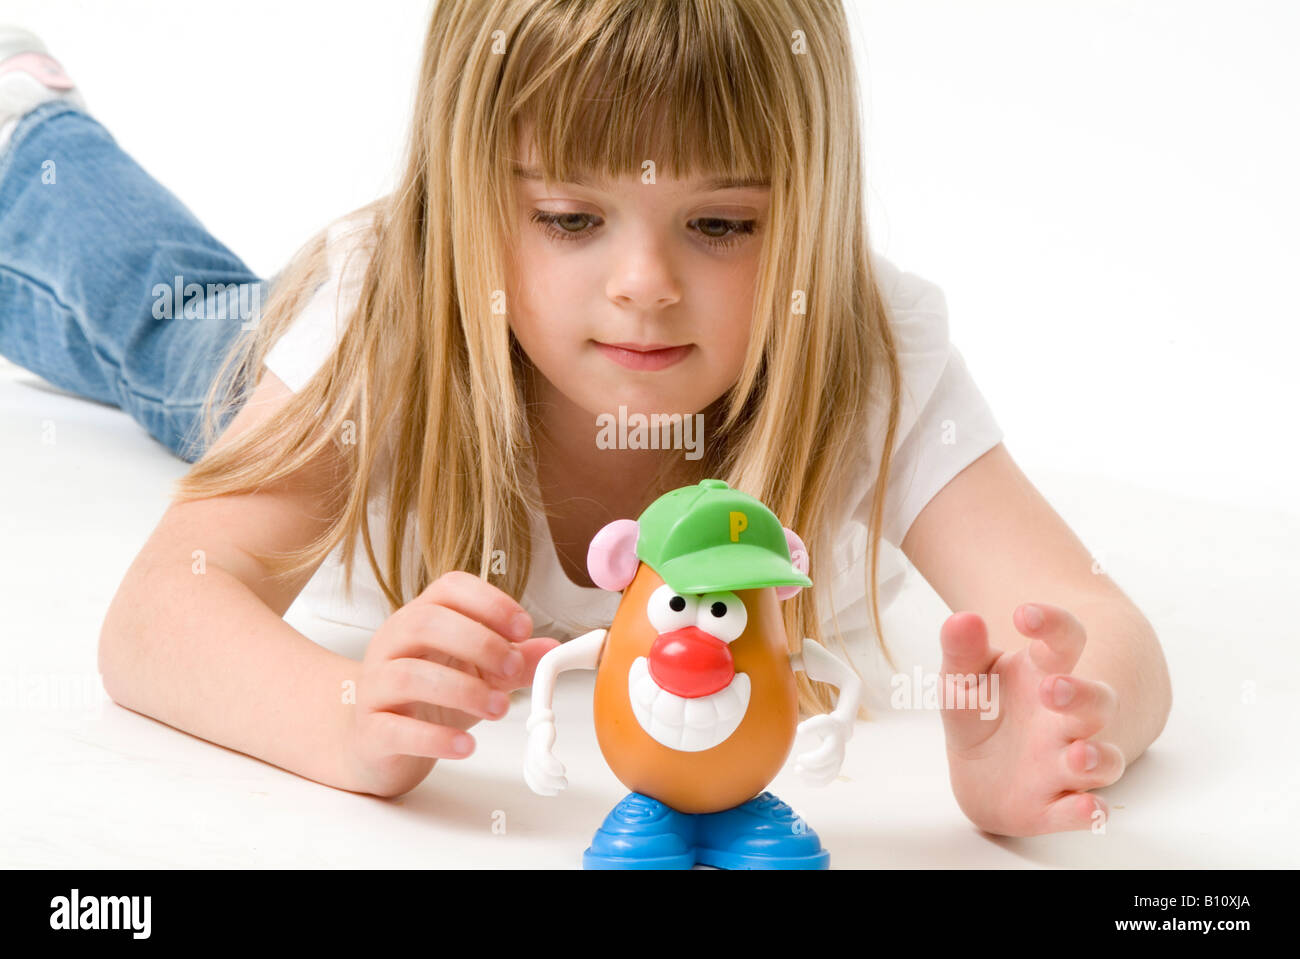 child playing play with mr potato head potatohead toy eye hand cordination learn learning child kid girl educational education Stock Photo